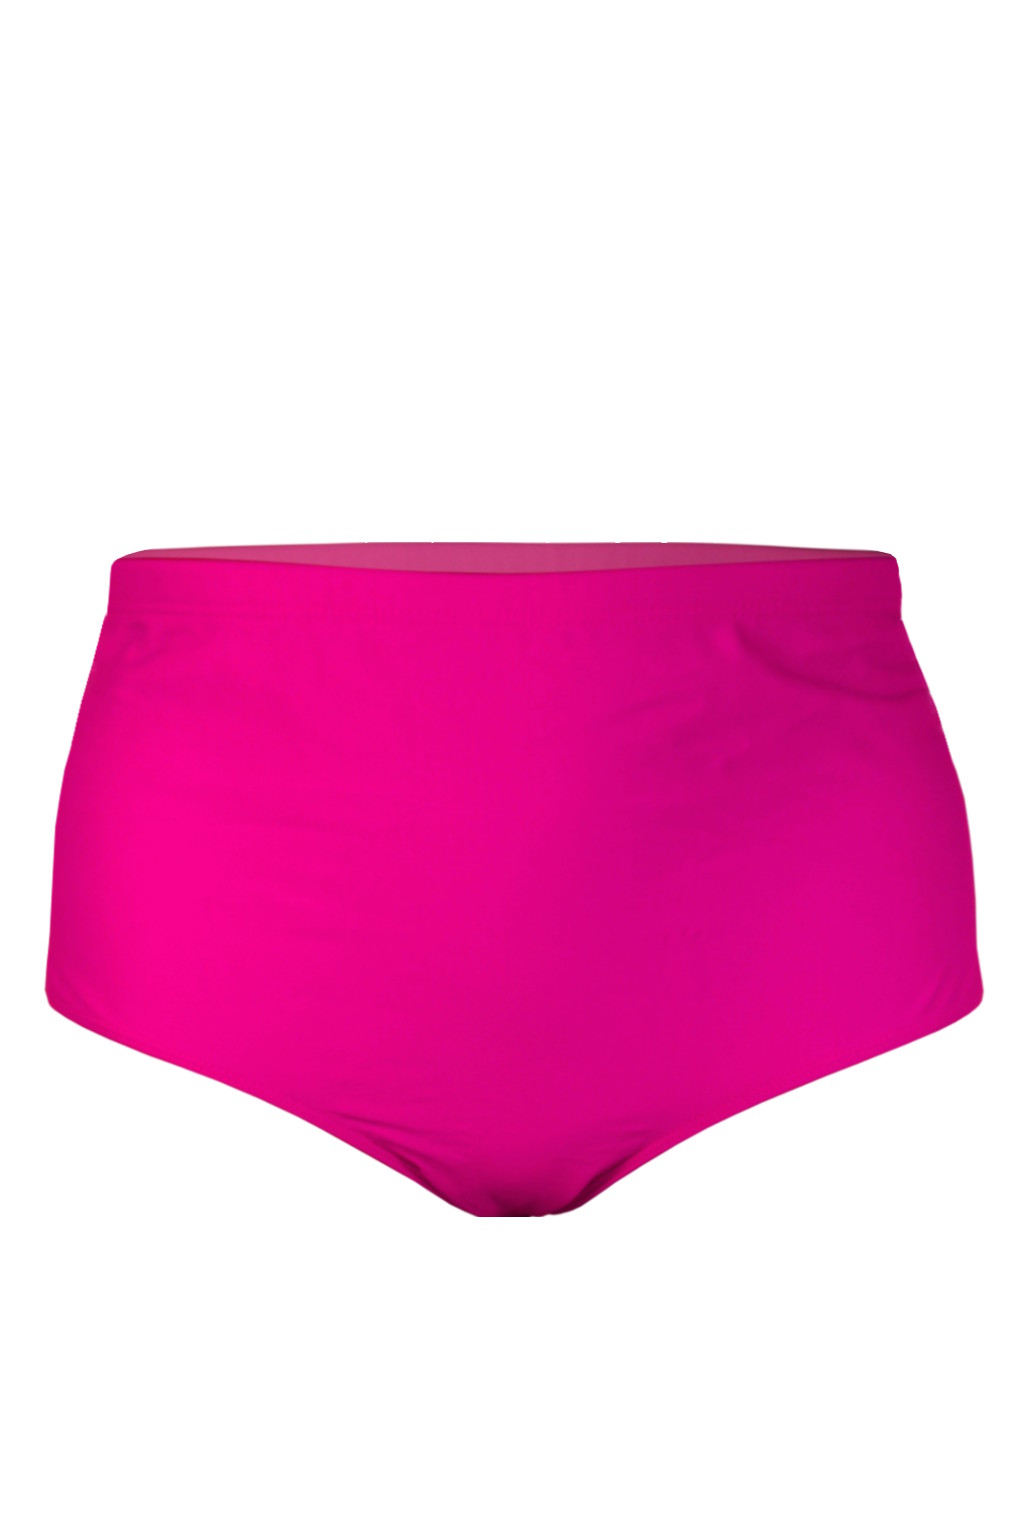 Gerrard Pink extra plavkové kalhotky do pasu 3XL růžová